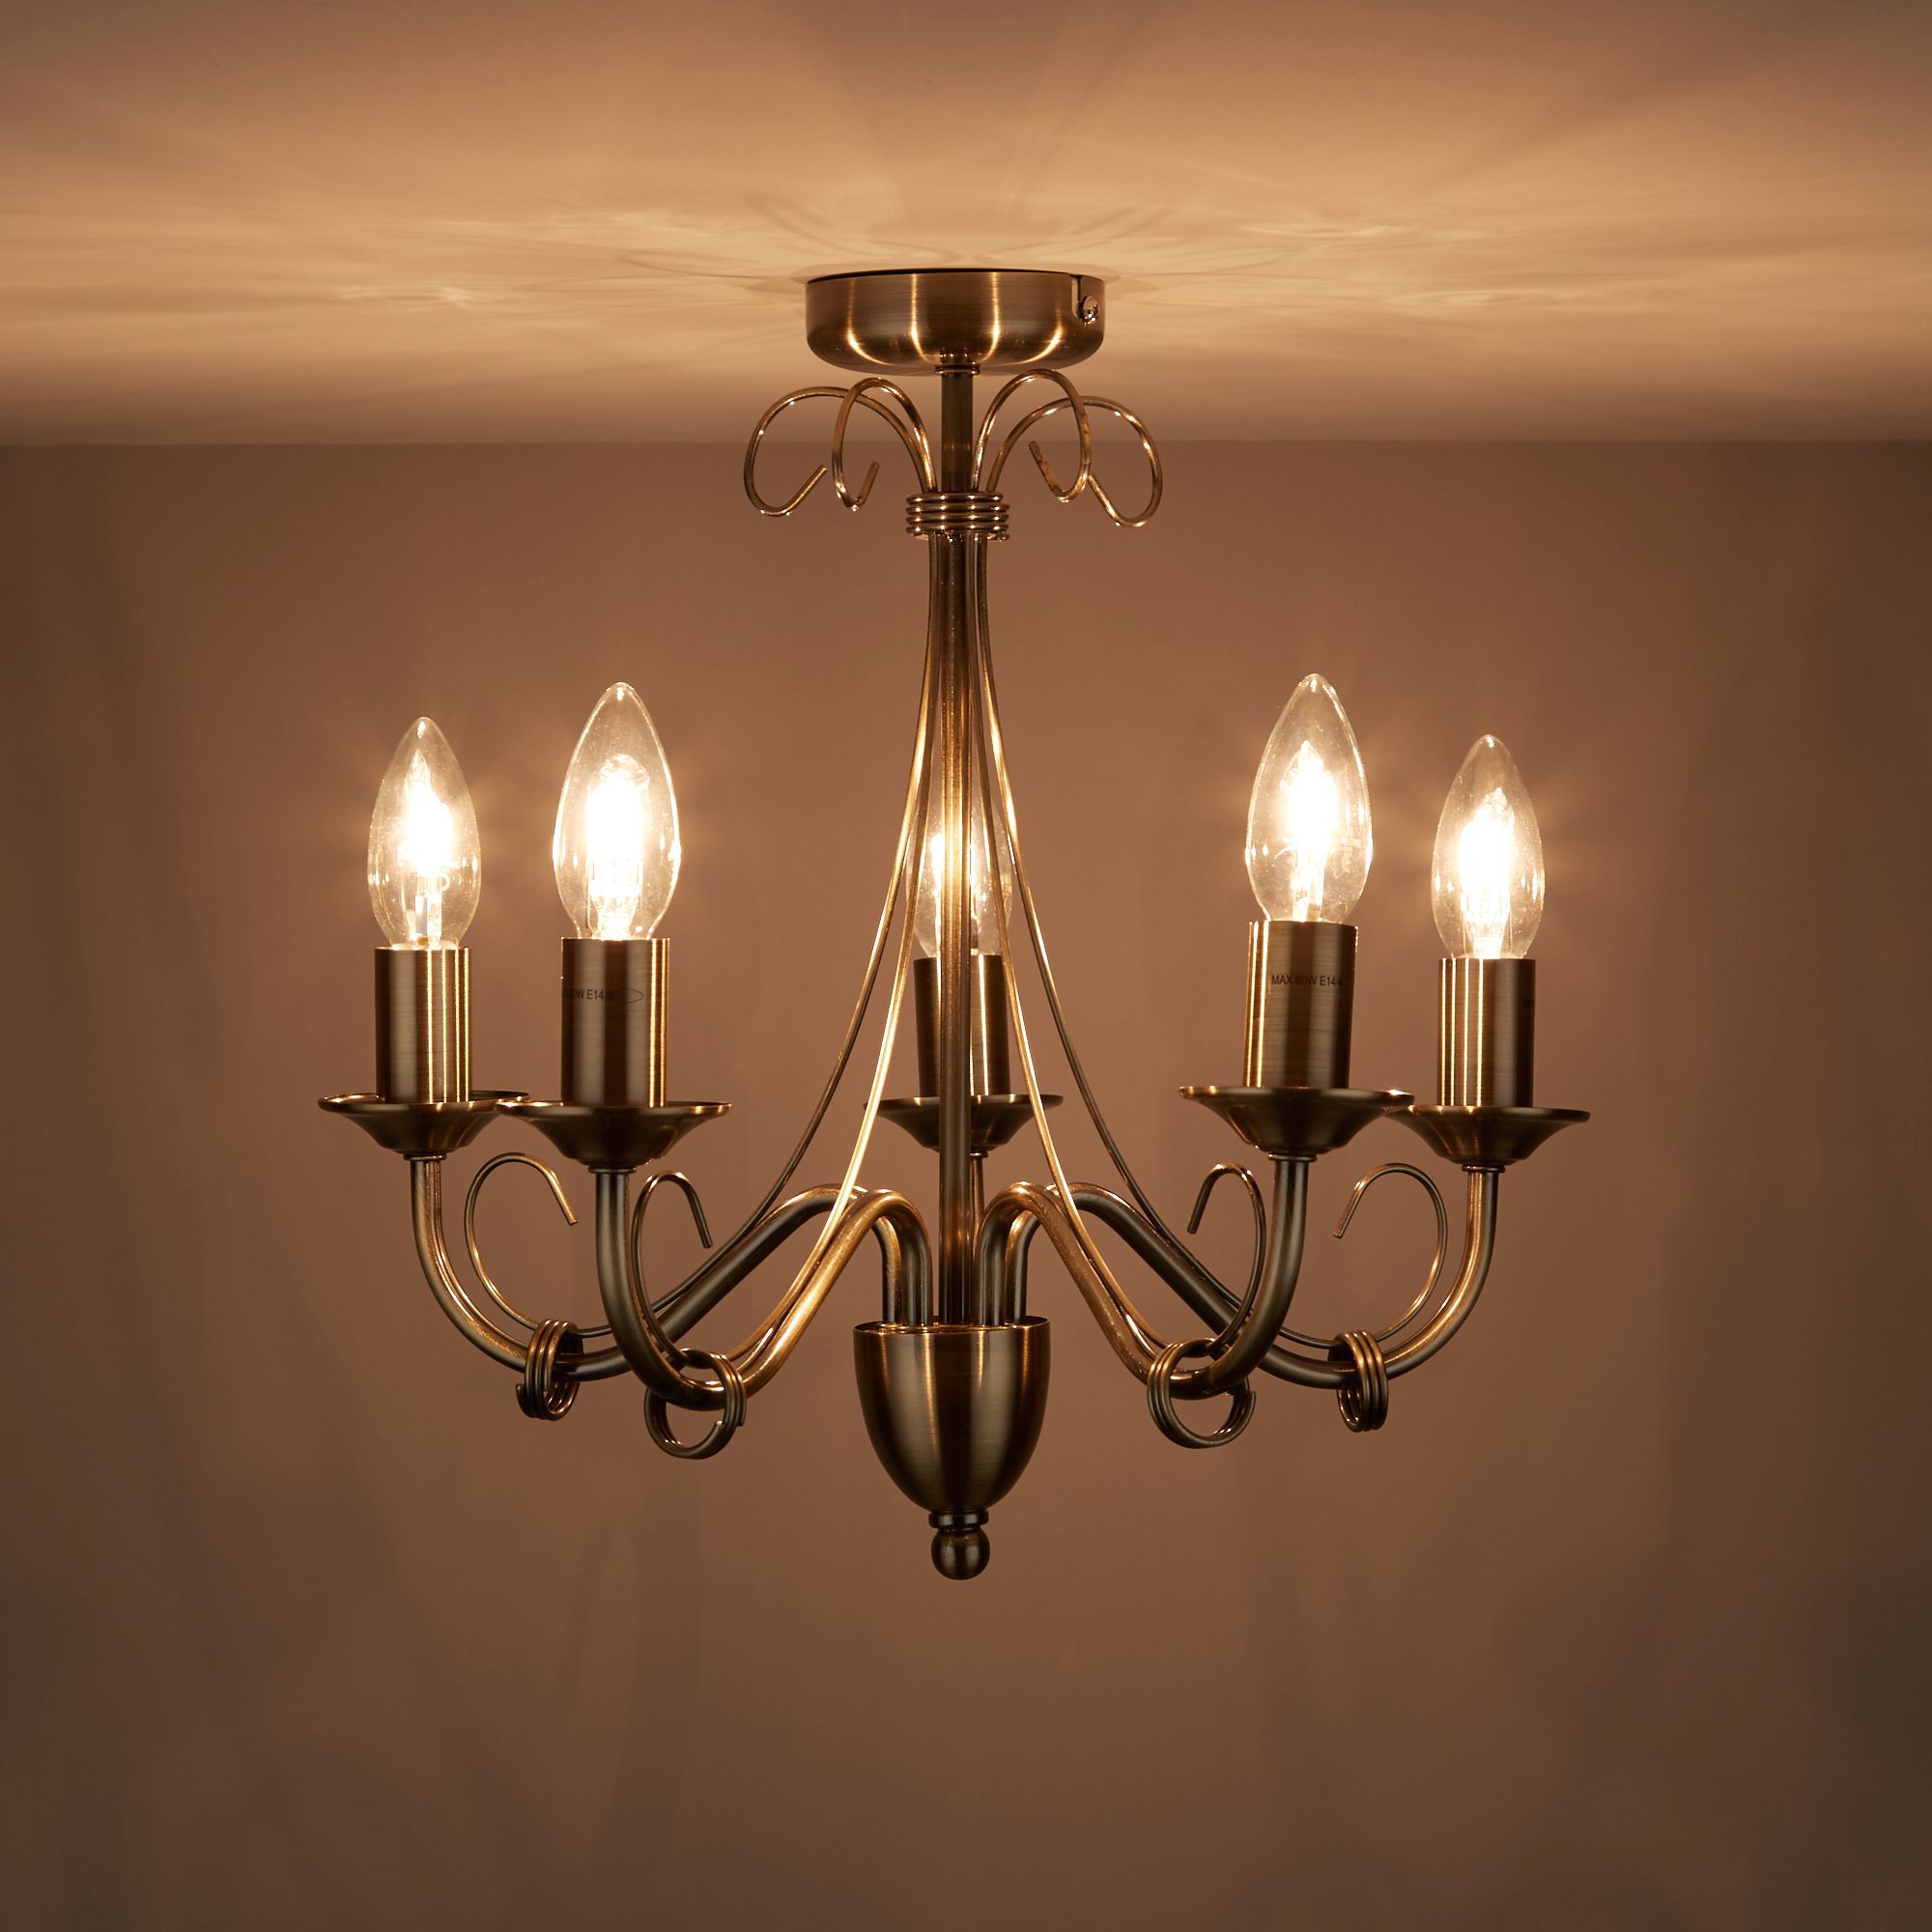 Inuus Chandelier Antique Brass Effect 5 Lamp Ceiling Light Diy At B Q